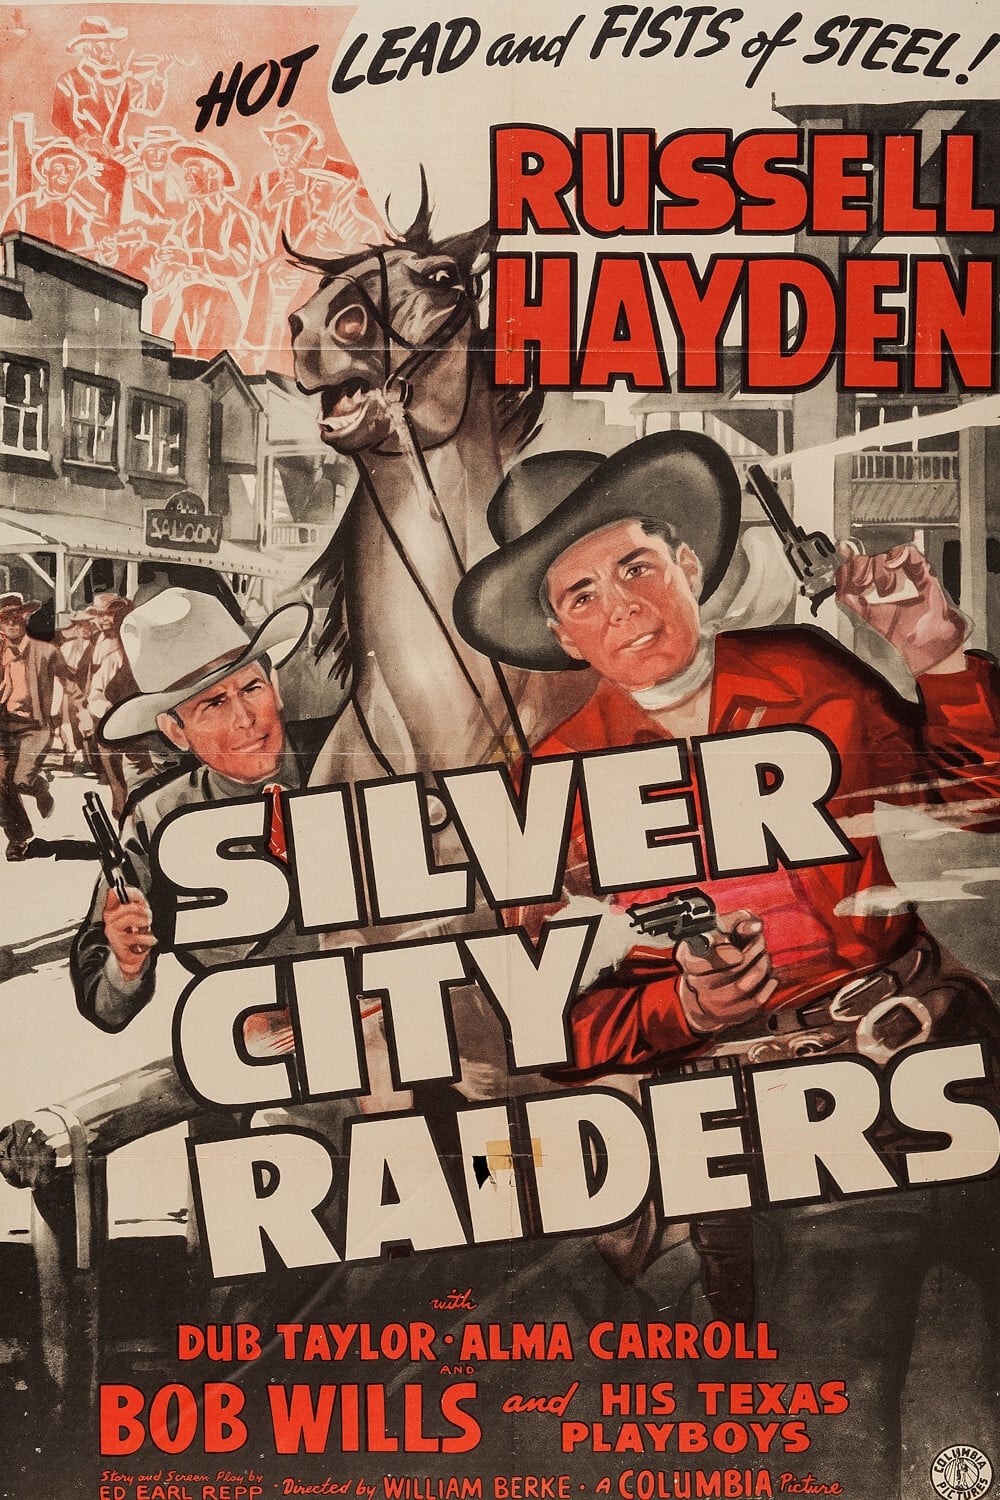 Silver City Raiders